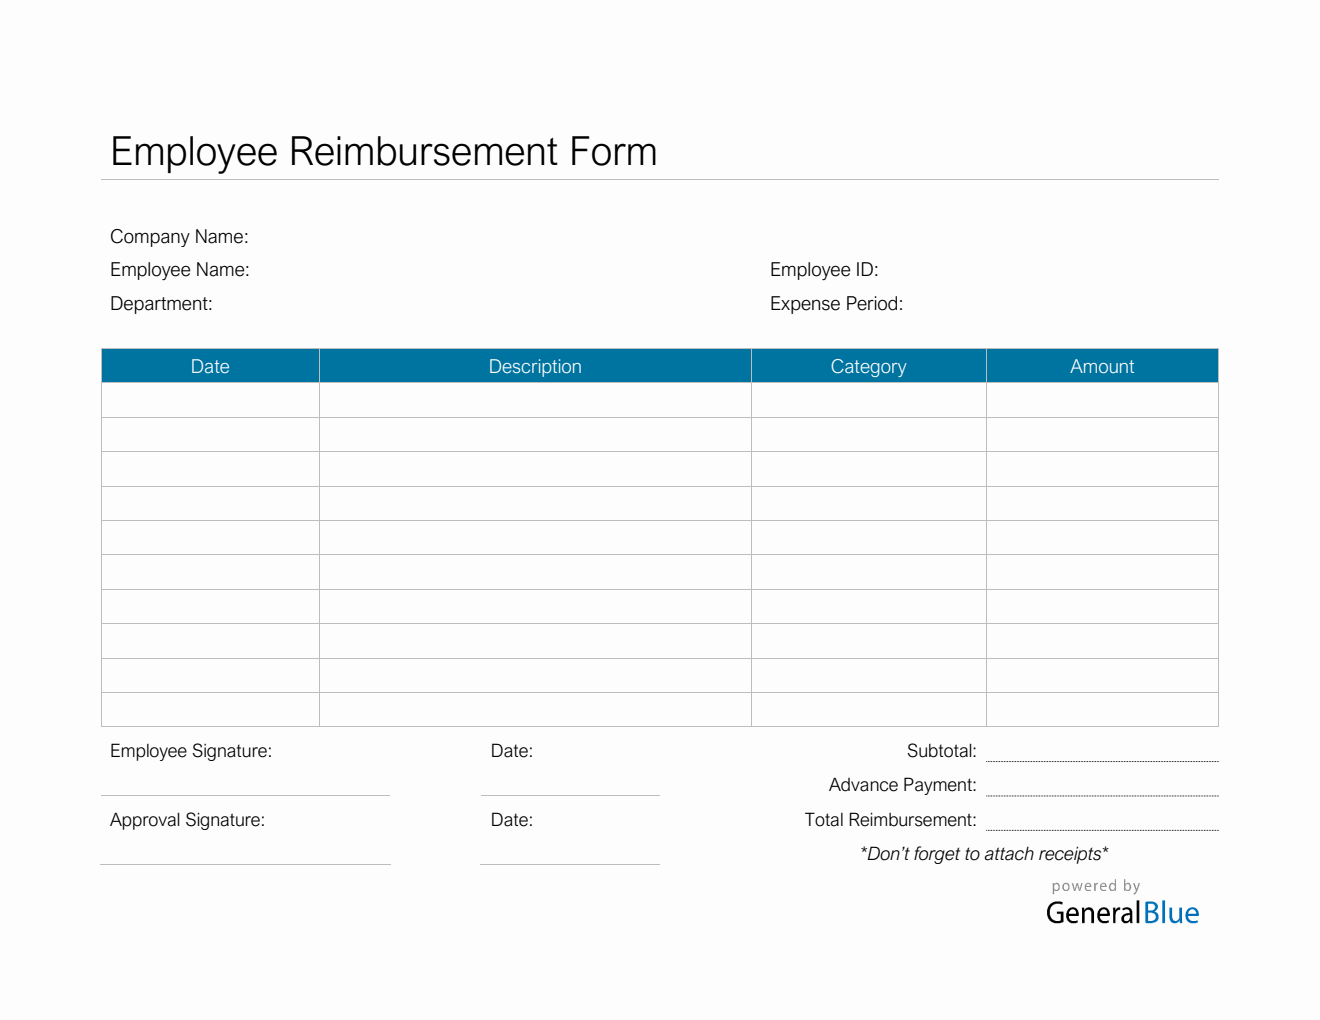 Employee Reimbursement Form in PDF (Simple)